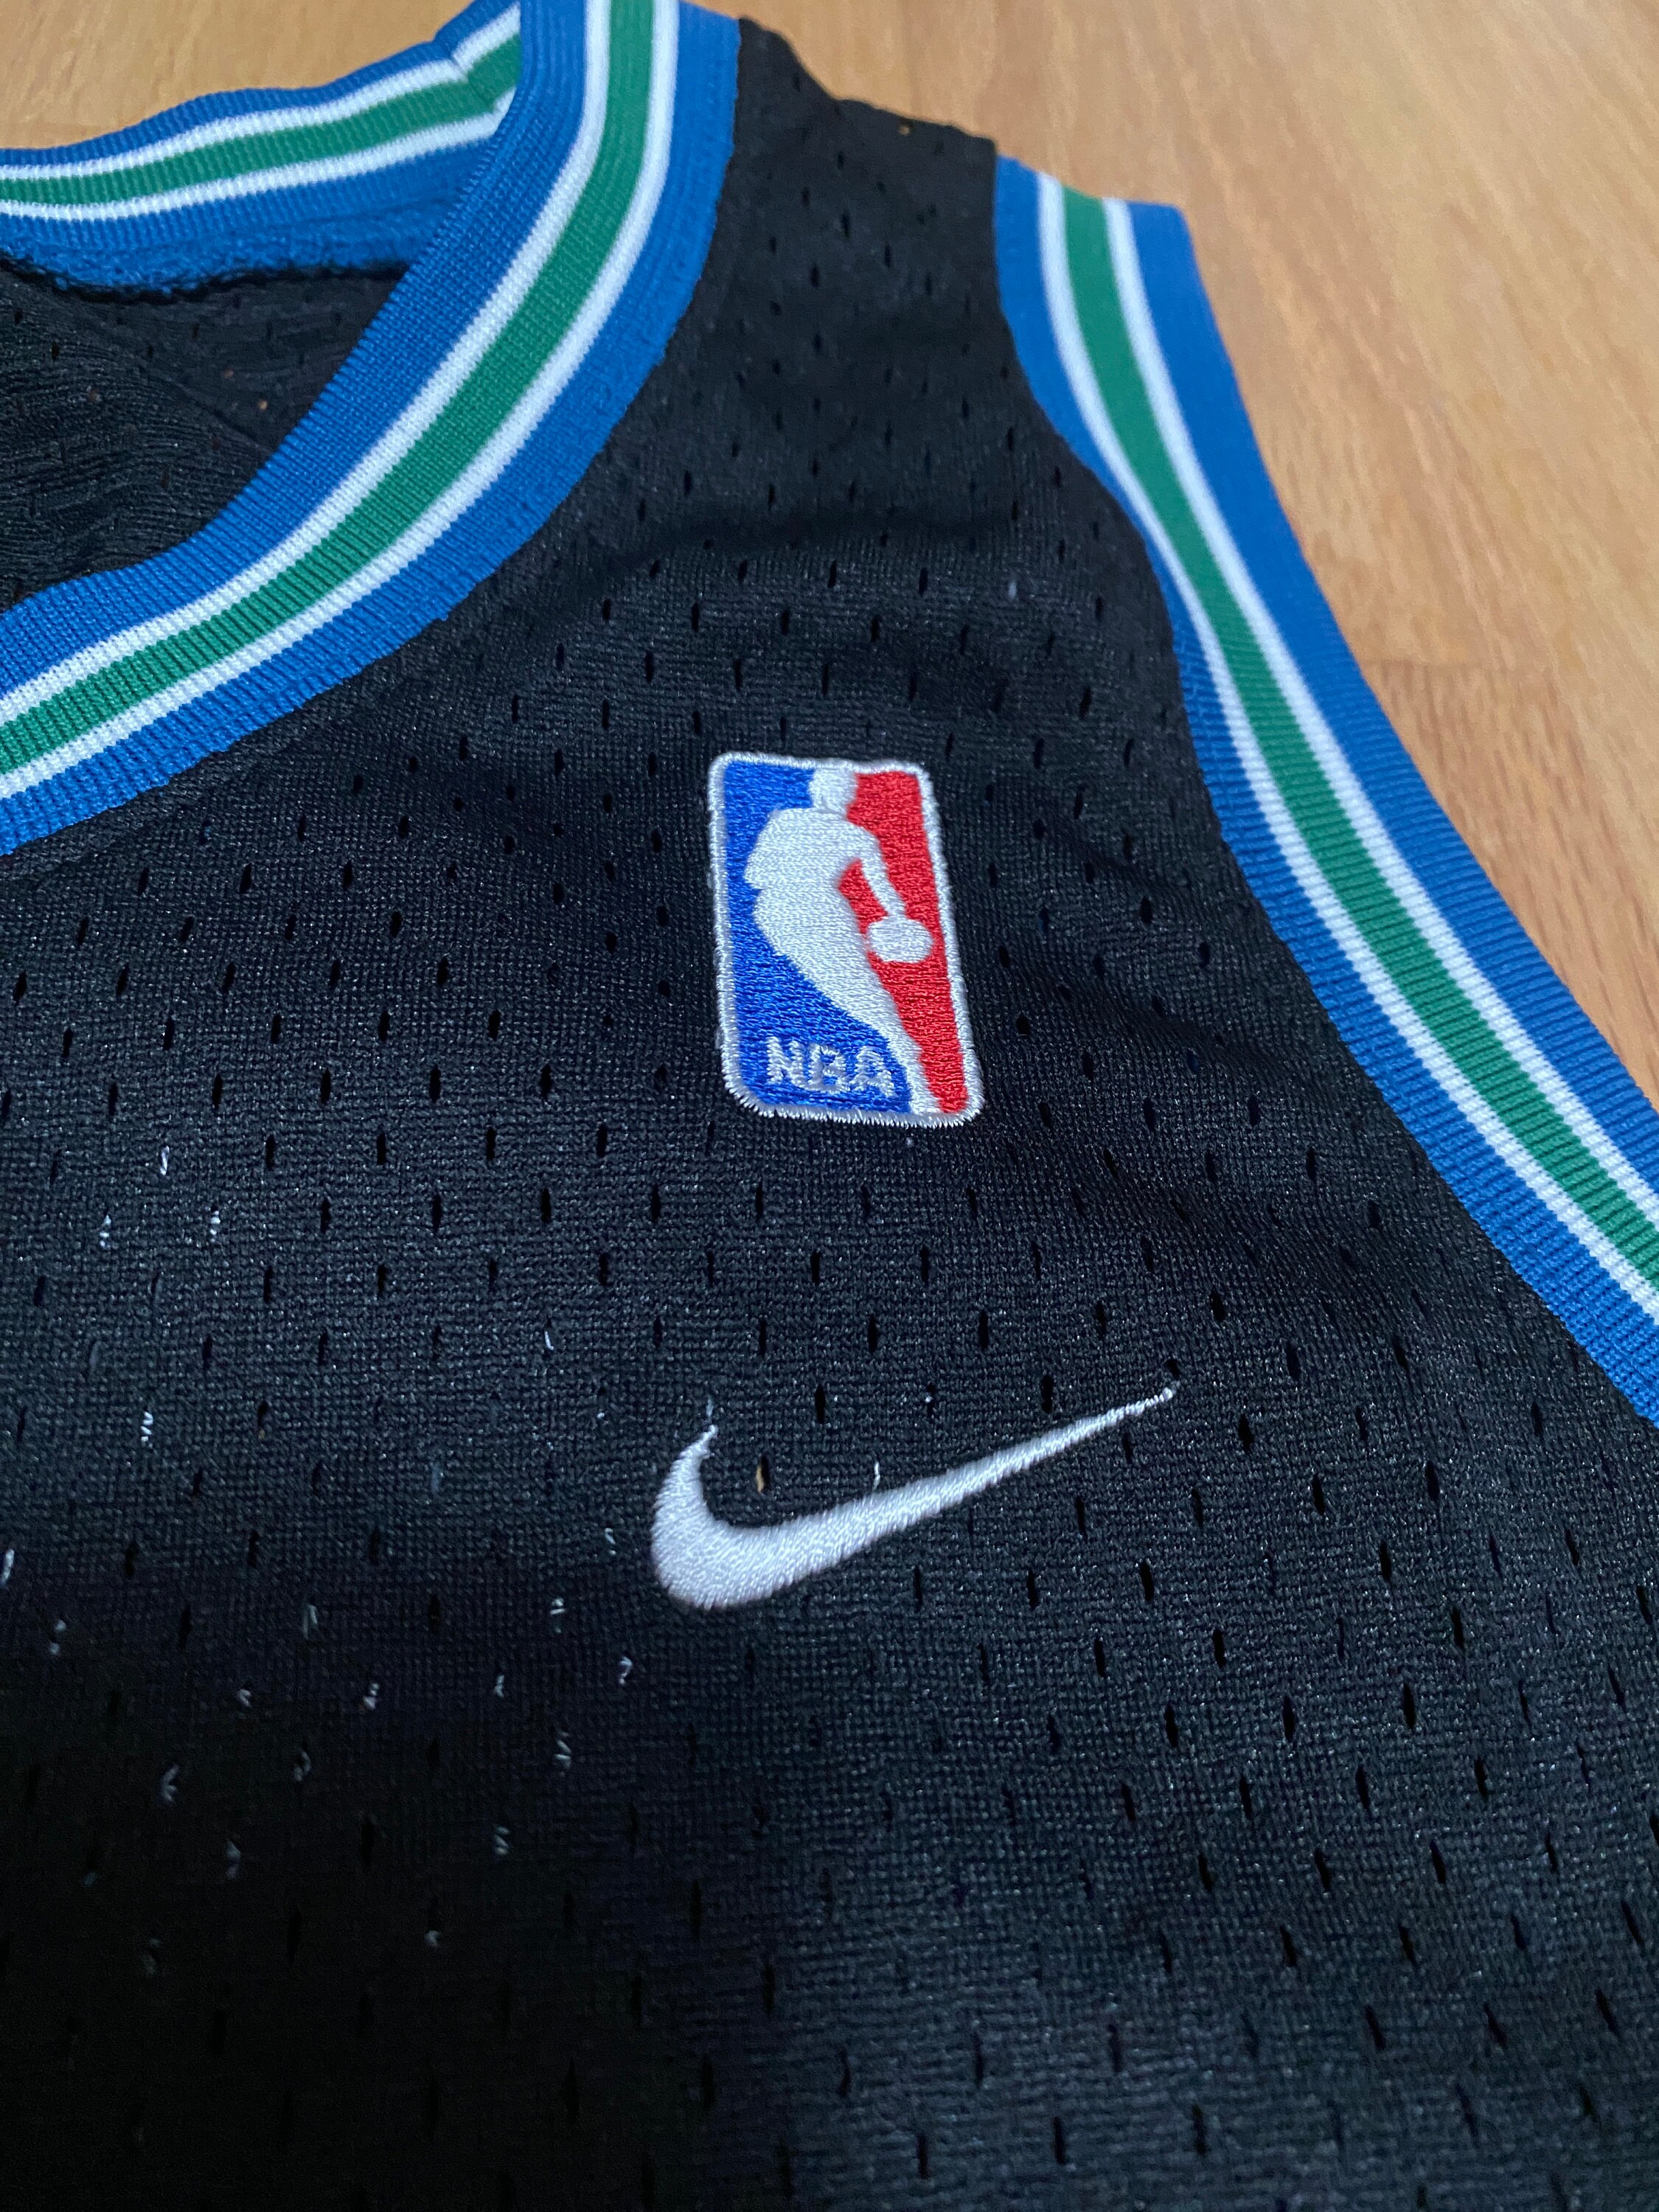 Vintage #21 KEVIN GARNETT Minnesota Timberwolves NBA Nike Jersey YL – XL3  VINTAGE CLOTHING